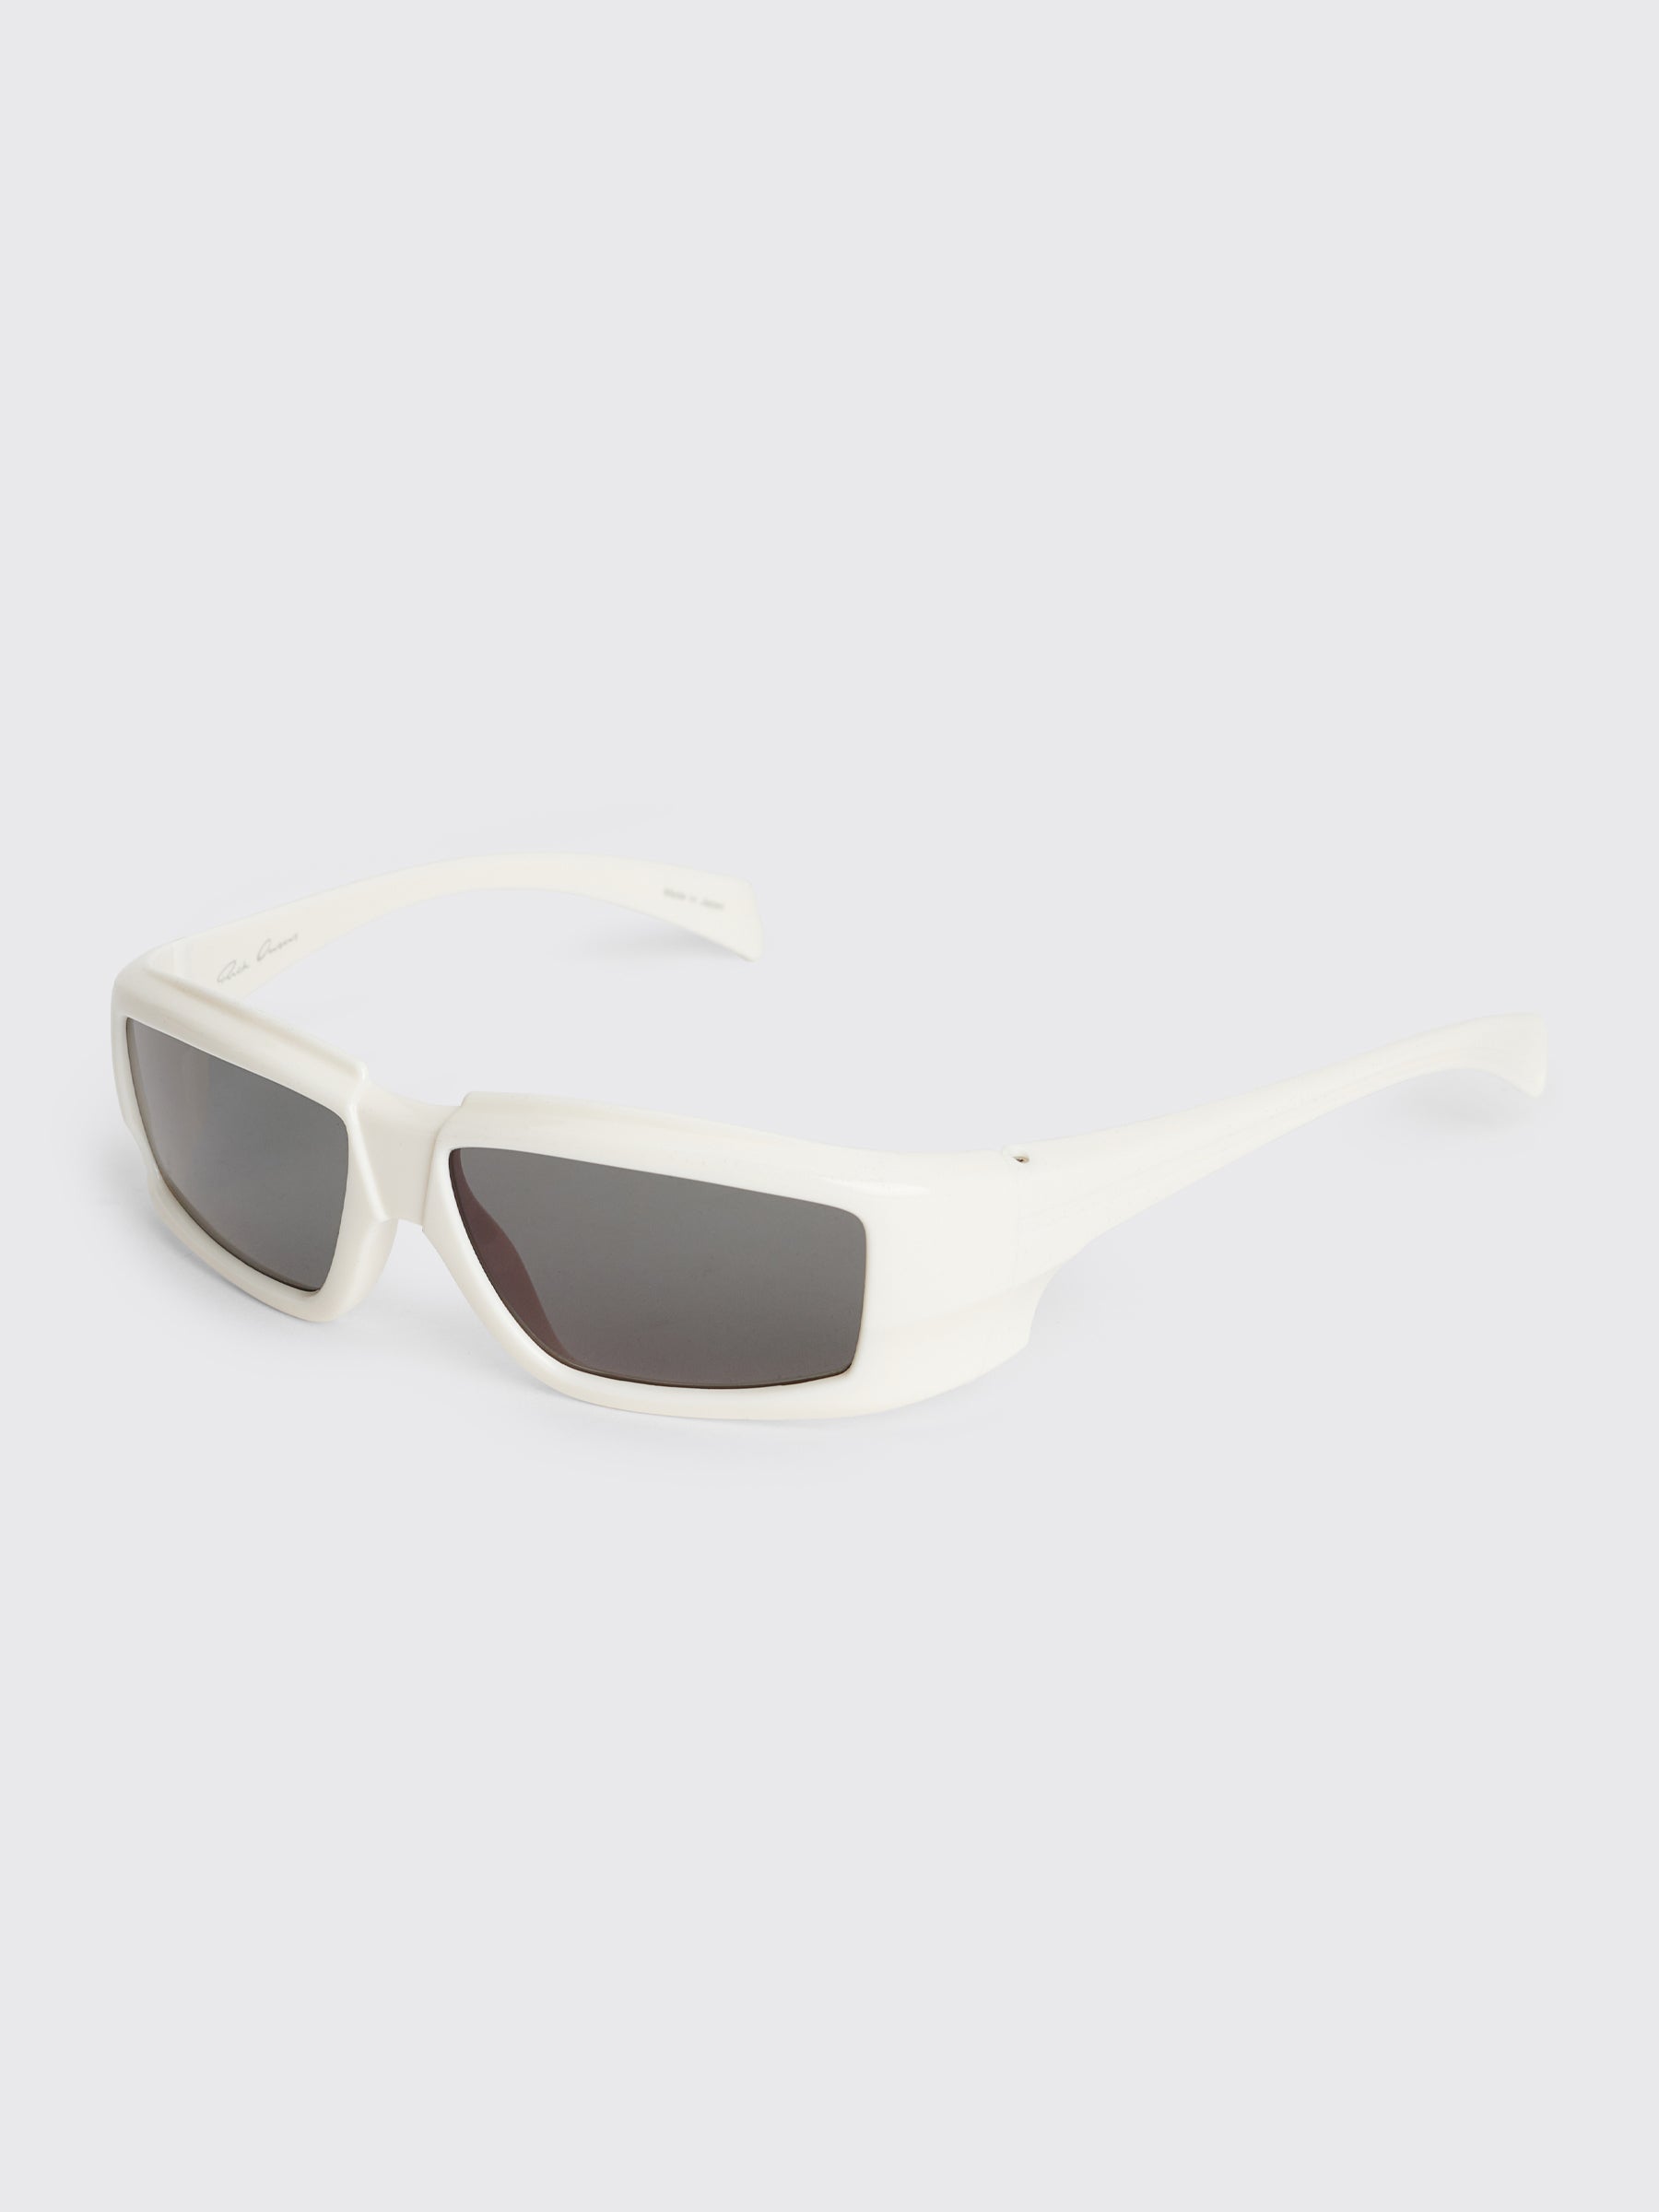 Rick Owens Sunglasses Cream / Black